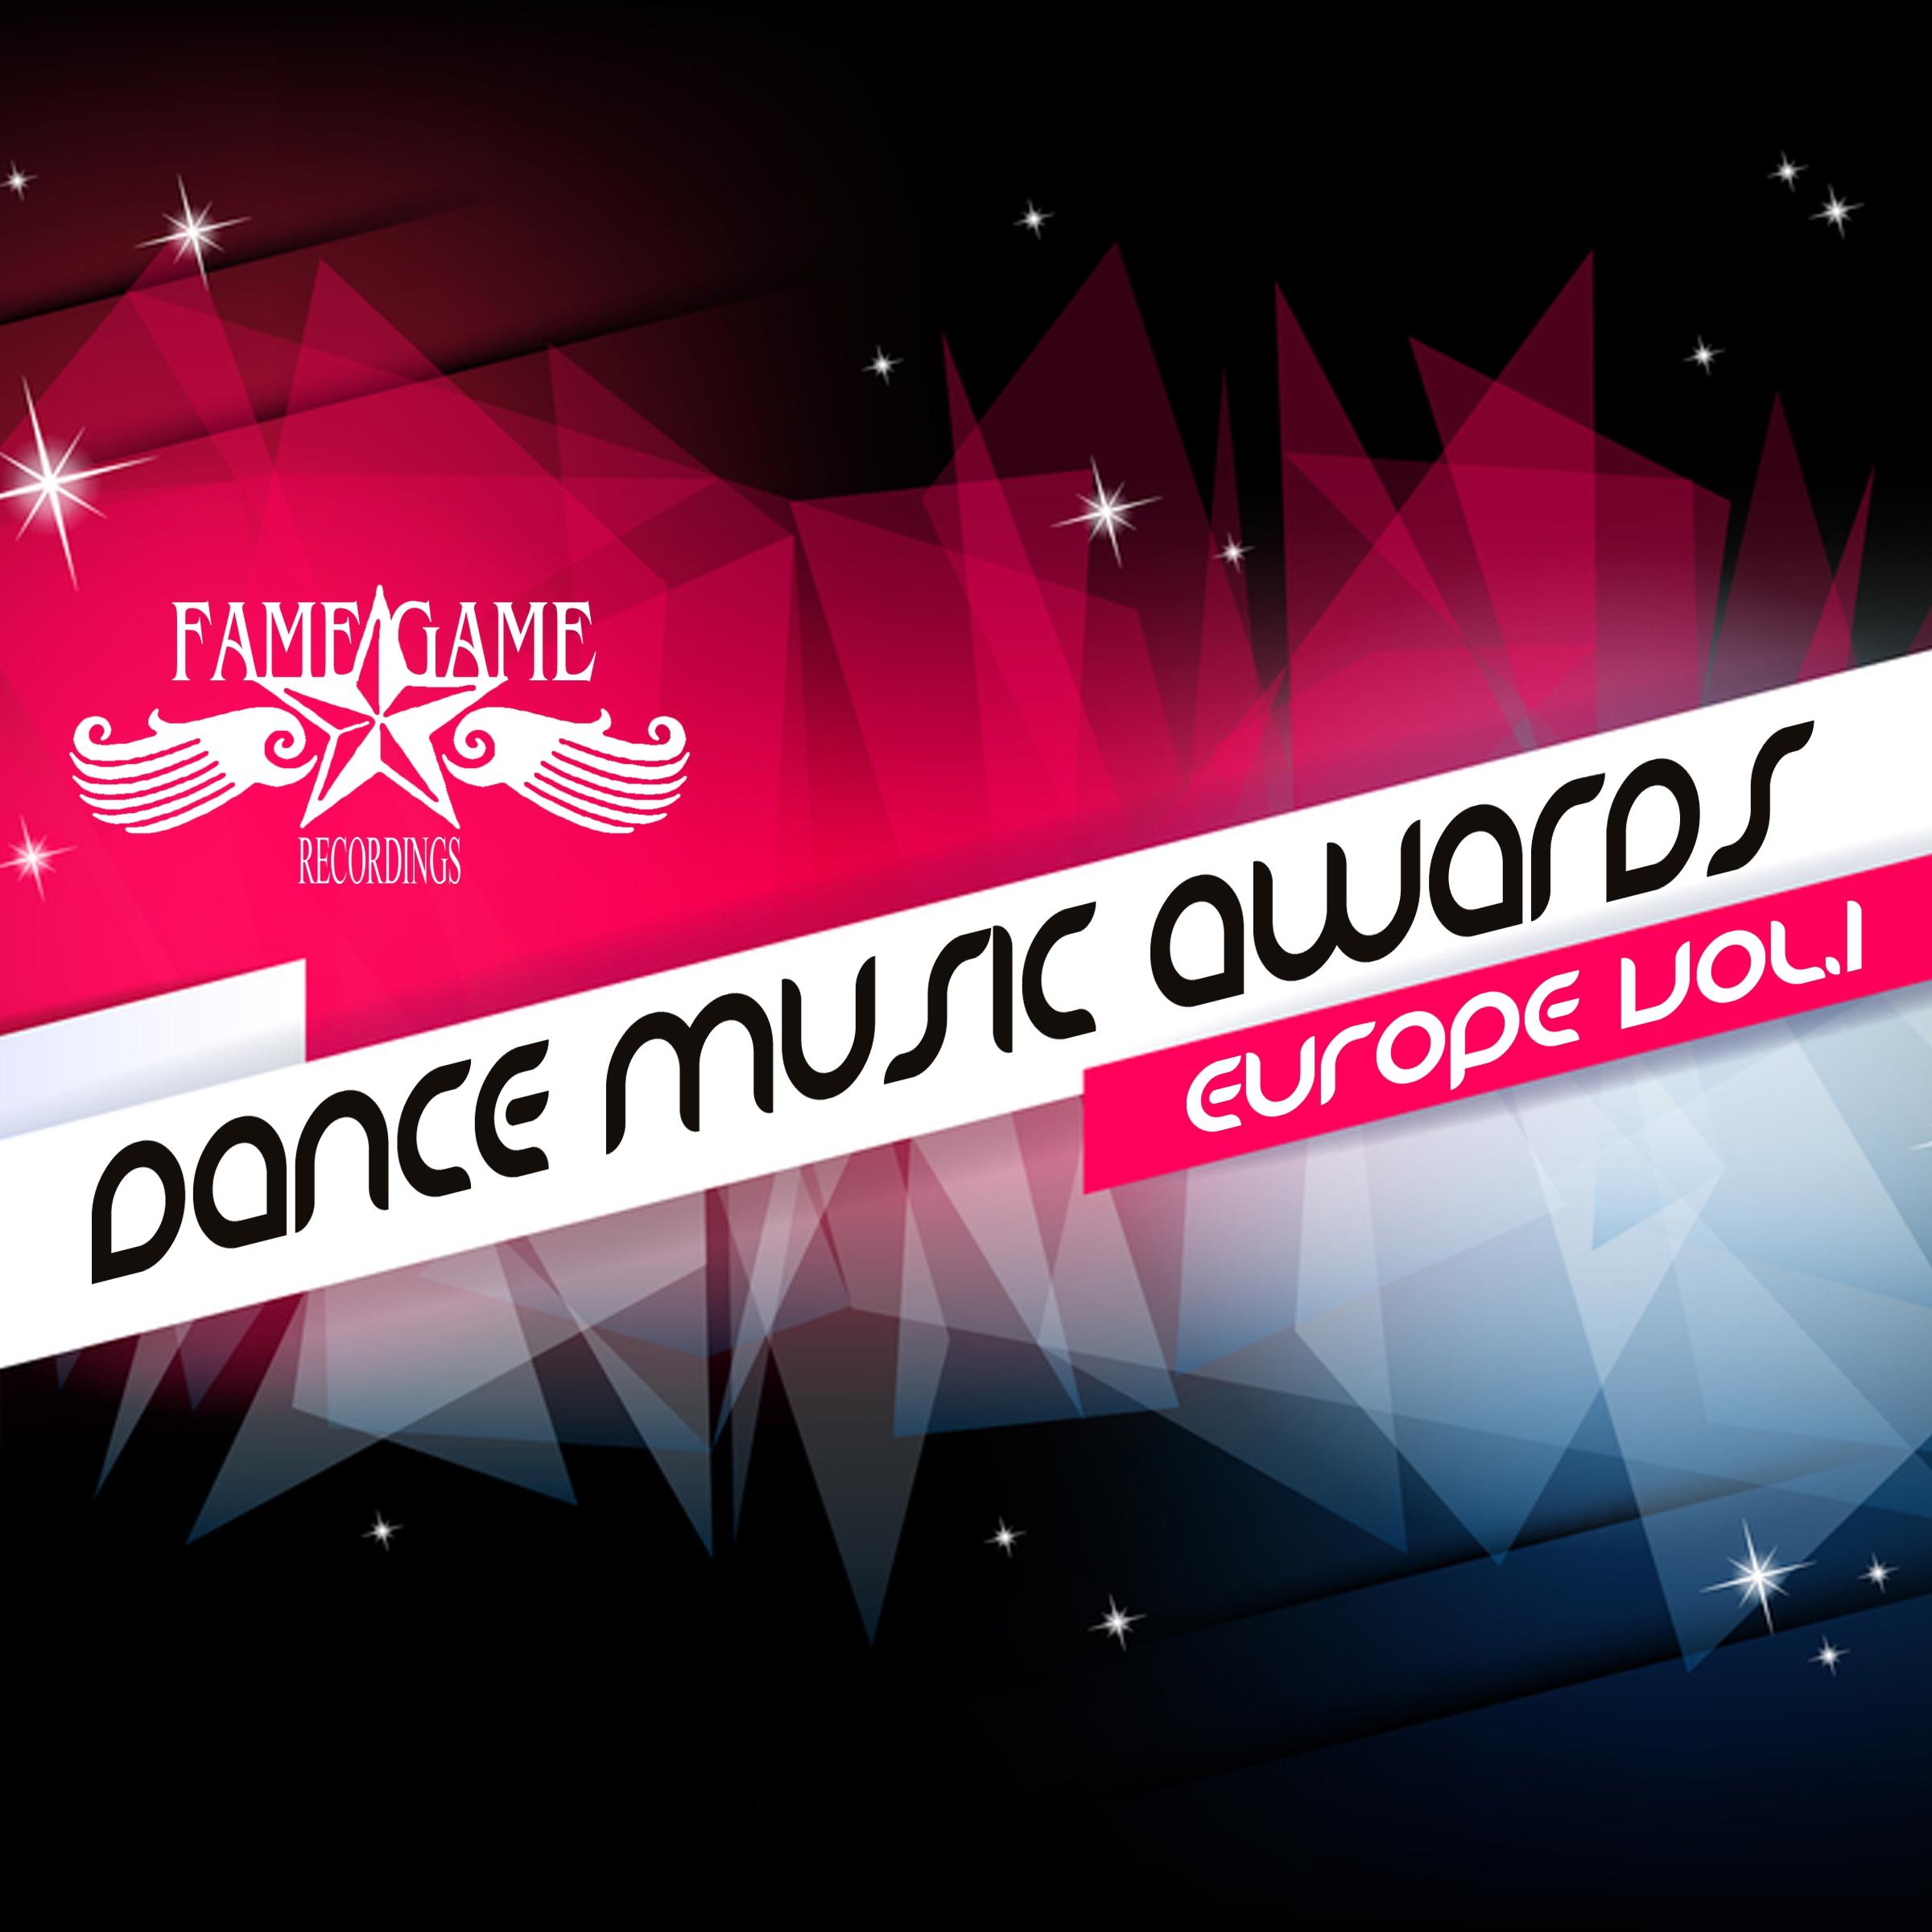 Dance Music Awards Europe, Vol. 1